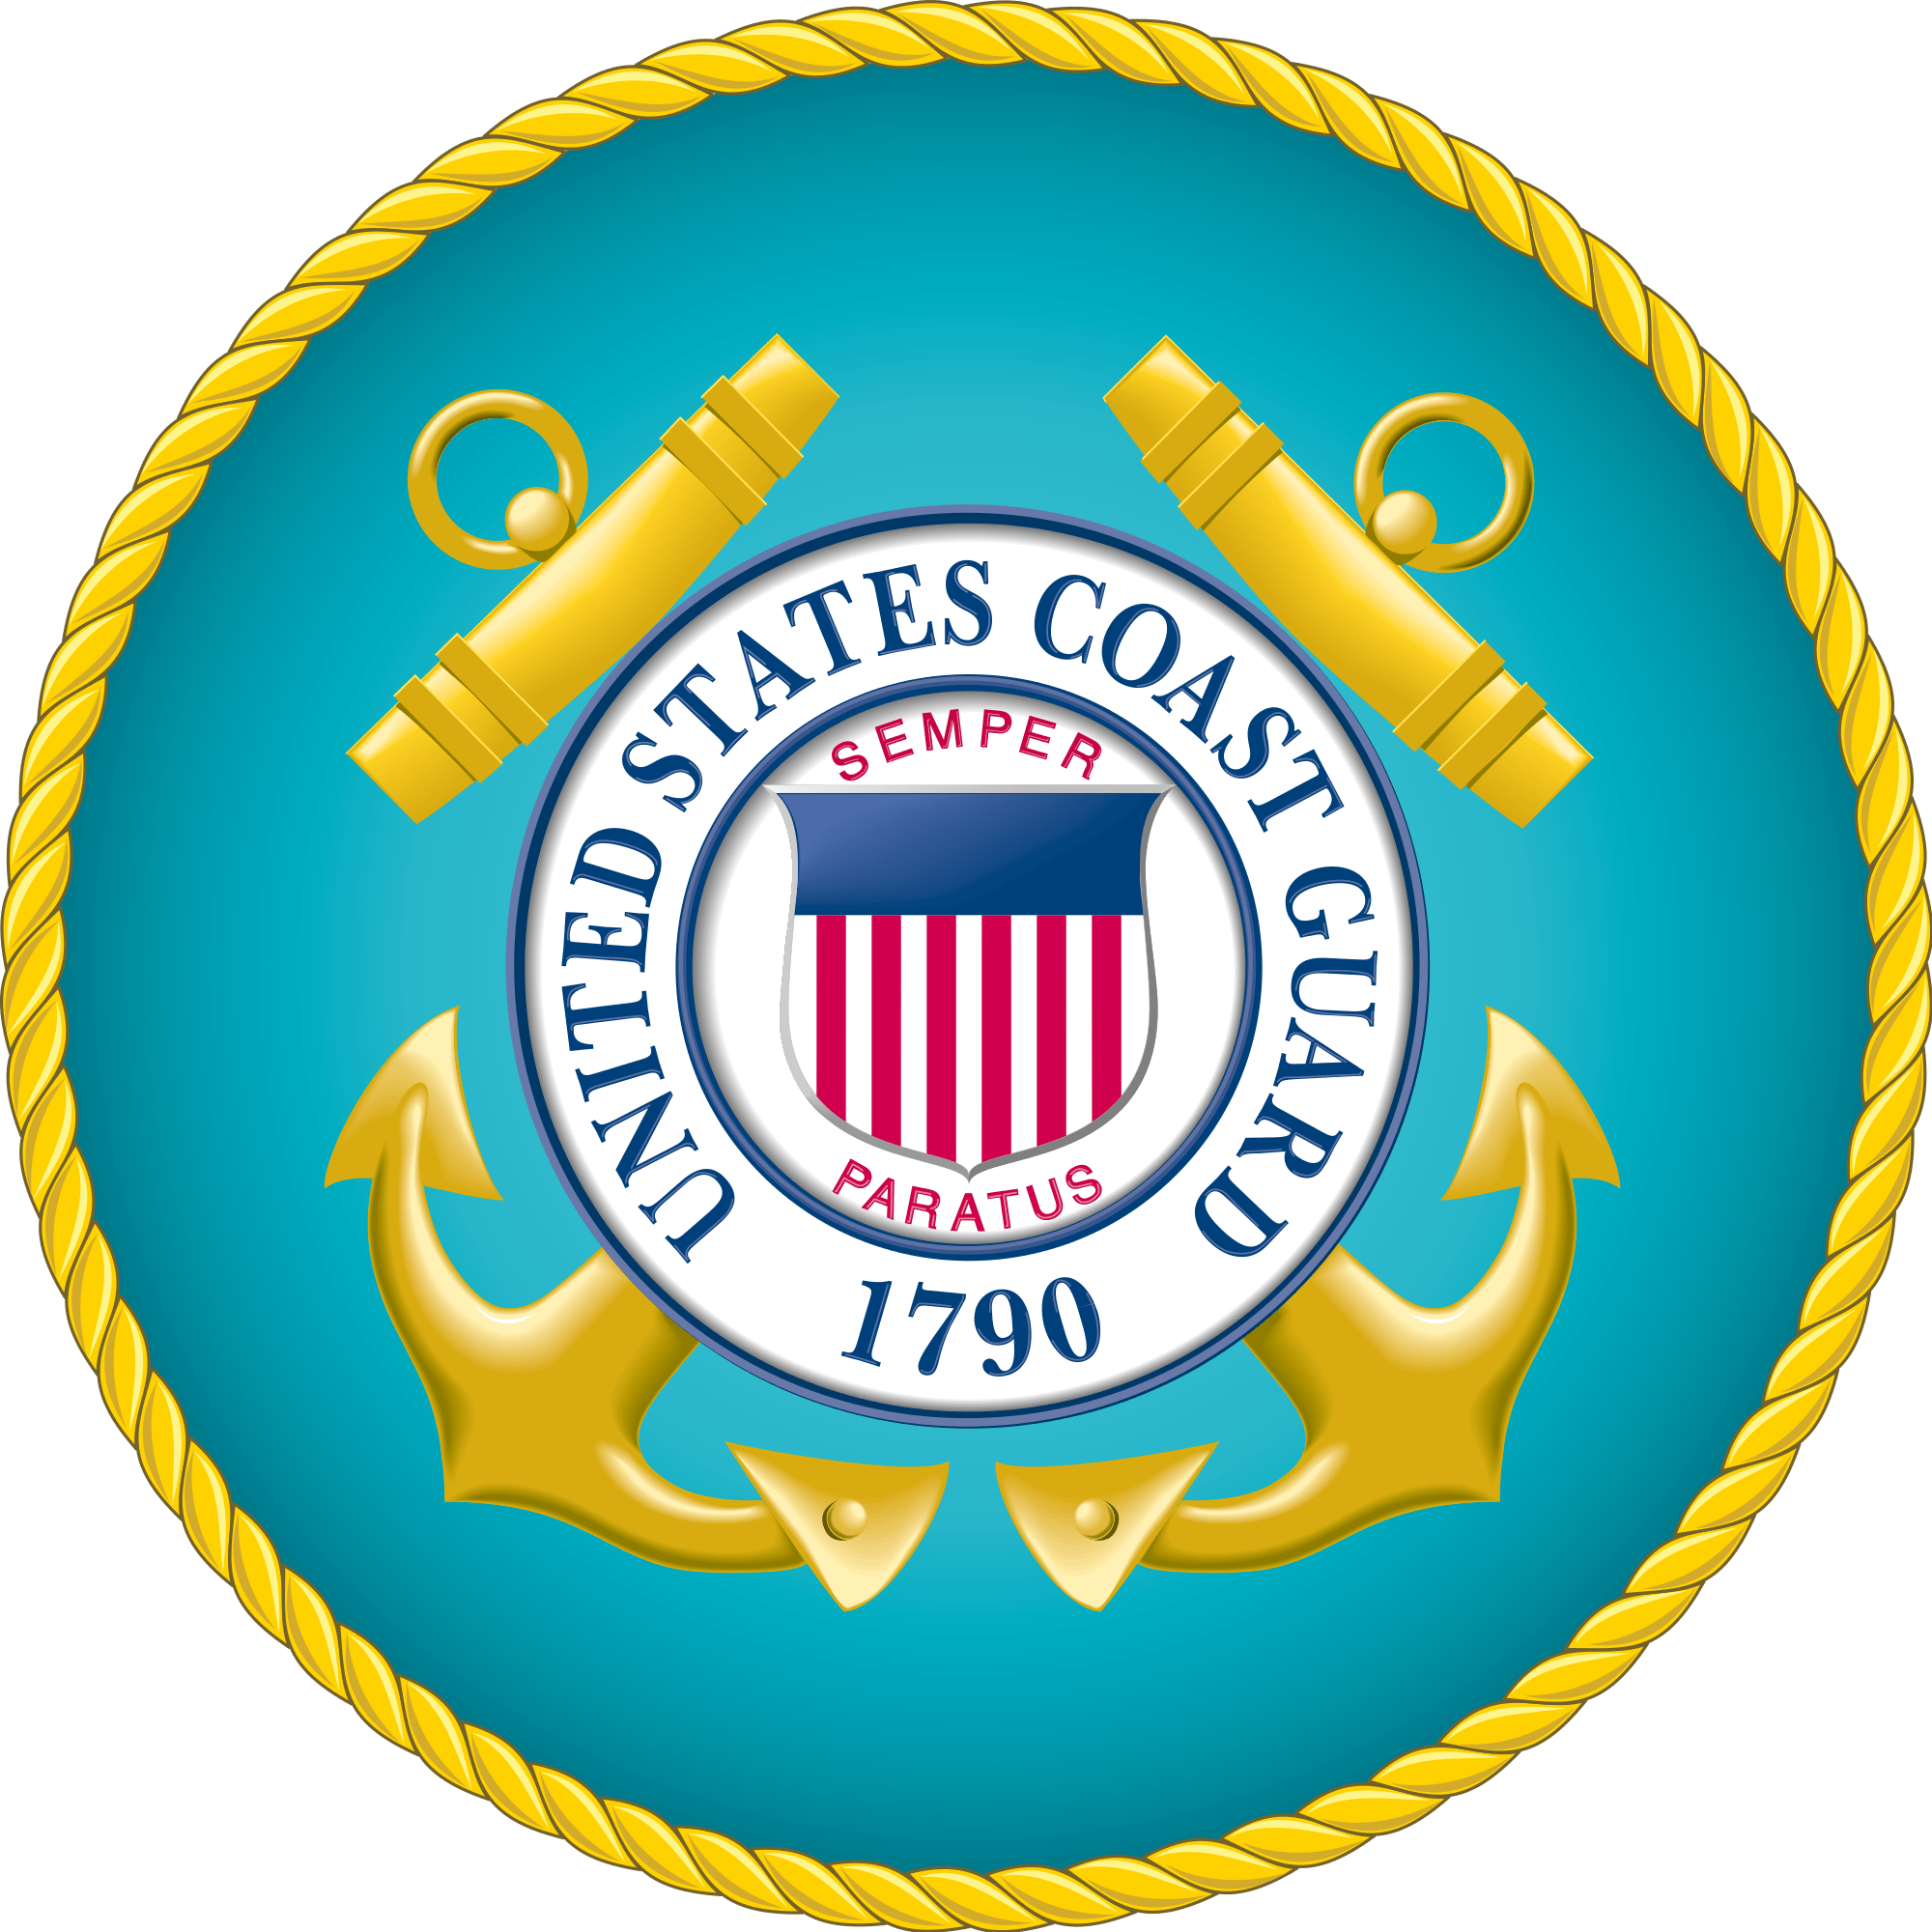 US-CoastGuard-Seal.svg